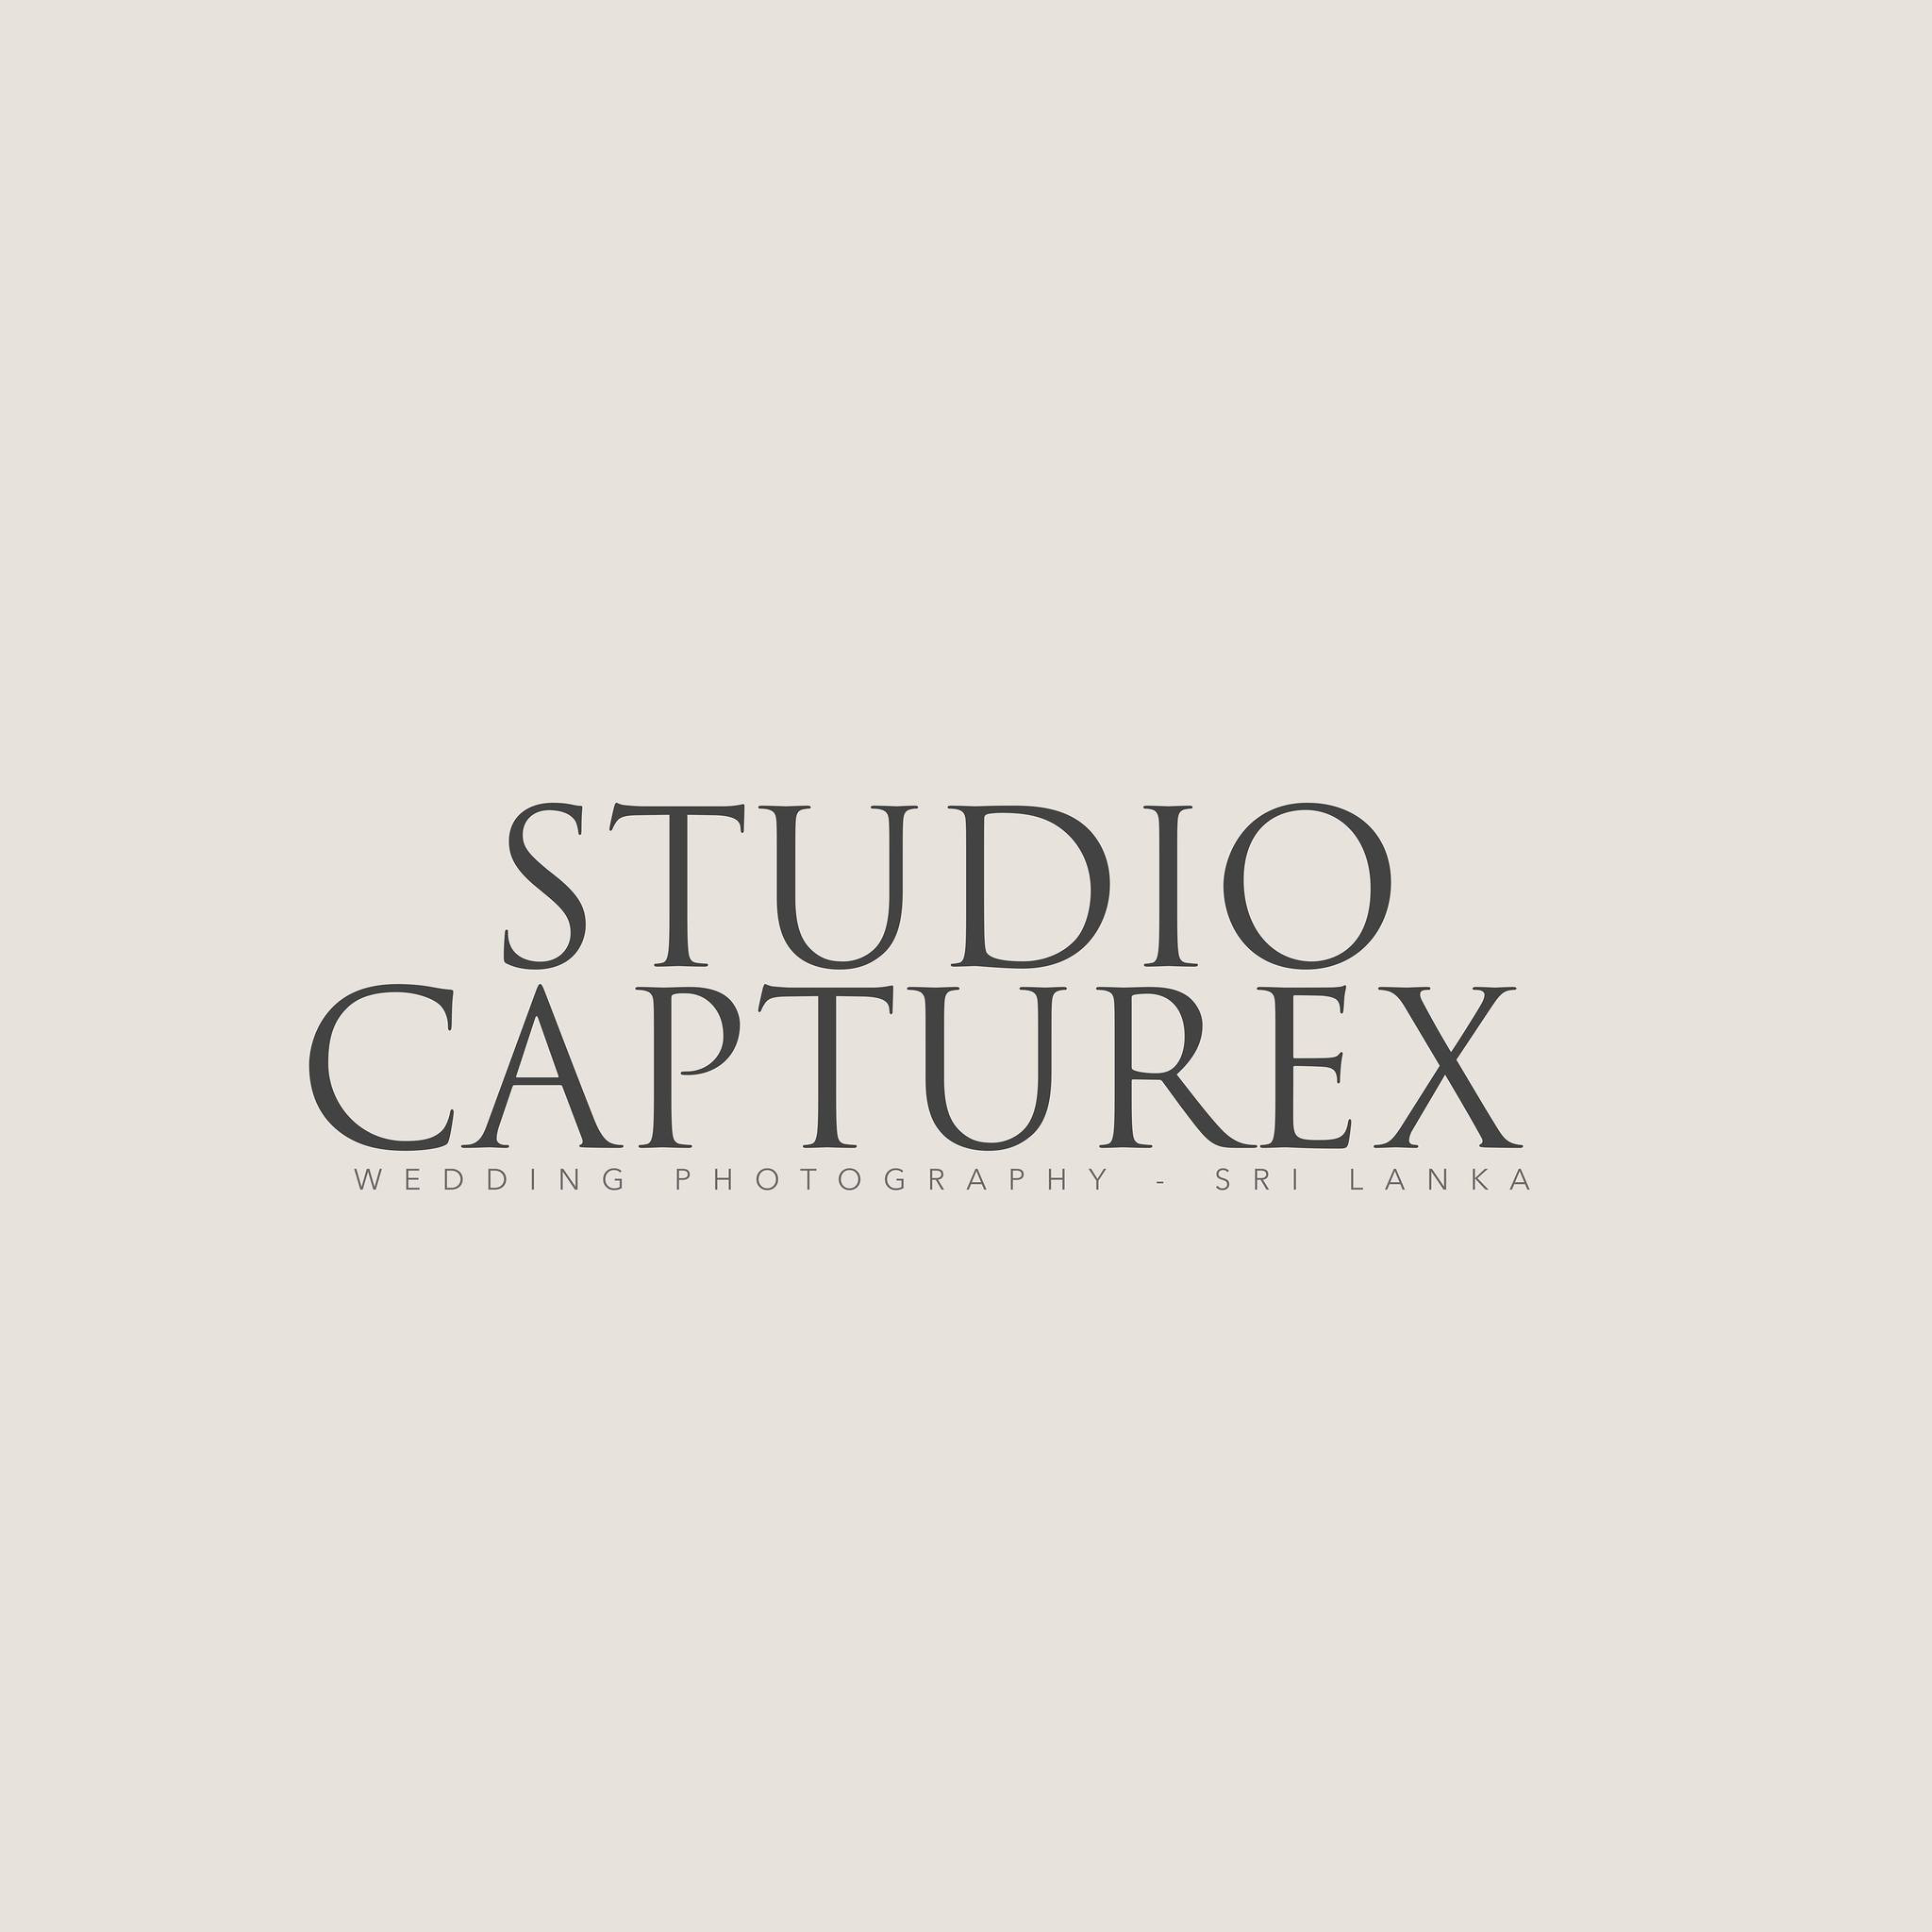 Studio CaptureX Wedding Photography - Sri Lanka